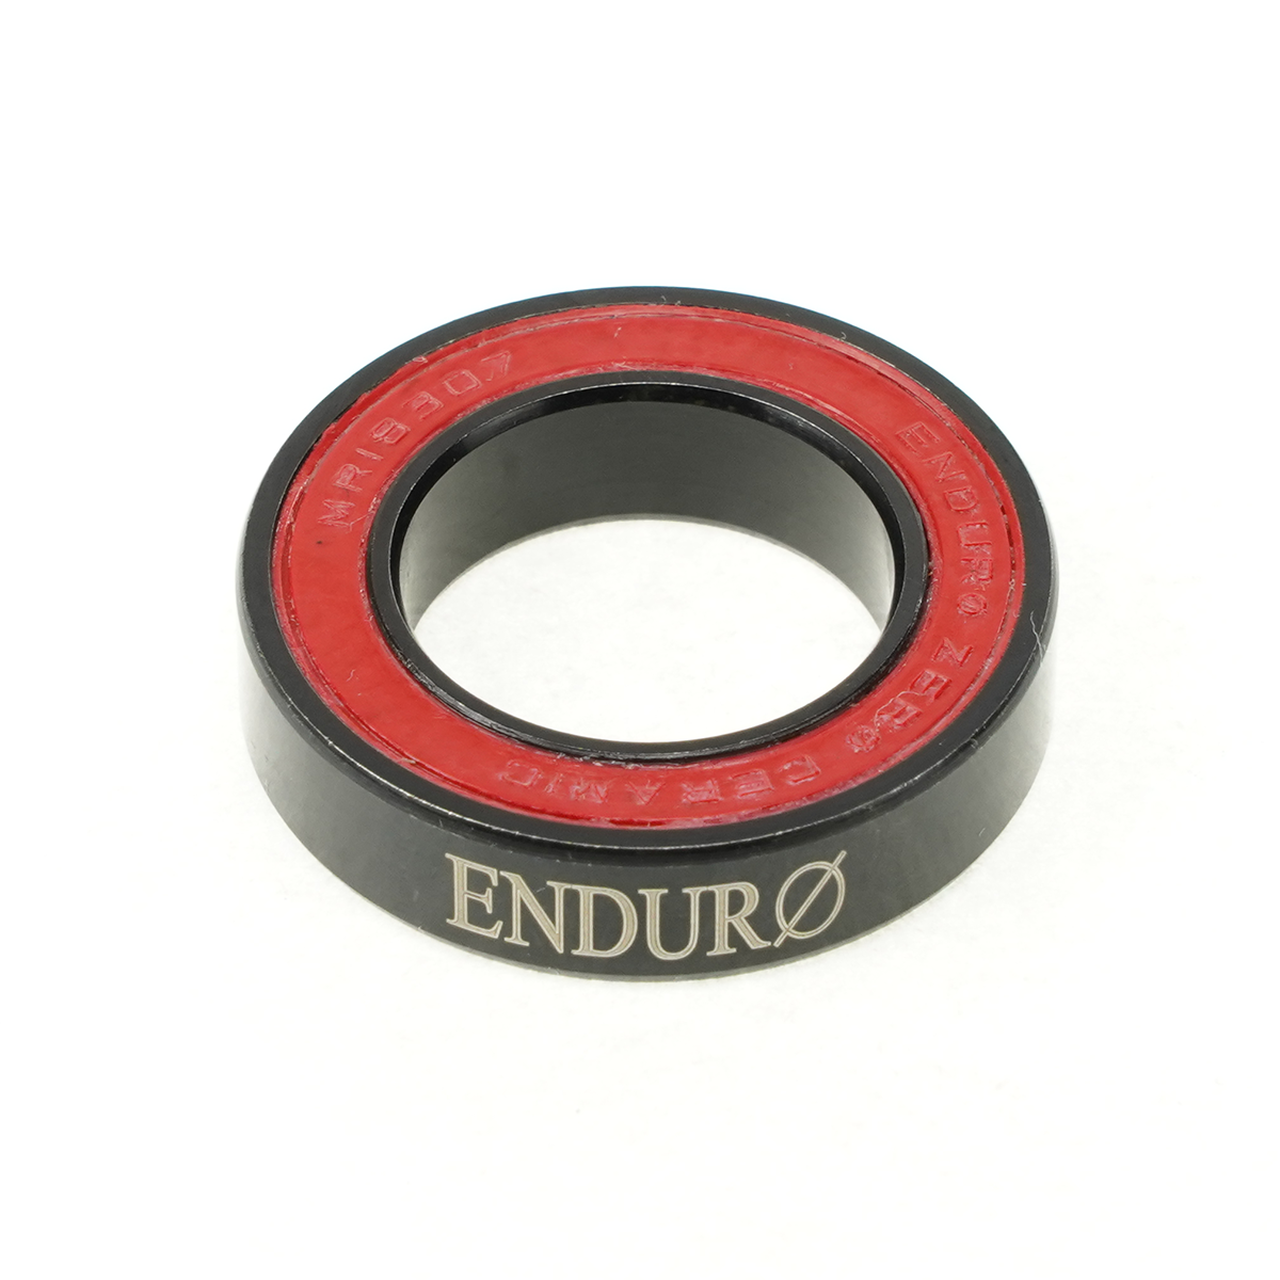 Enduro CO MR 18307 LLB - Enduro Zero, Black-Oxide, Ceramic Hybrid, ABEC-5, Radial Bearing (C3 Clearance) - 18mm x 30mm x 7mm